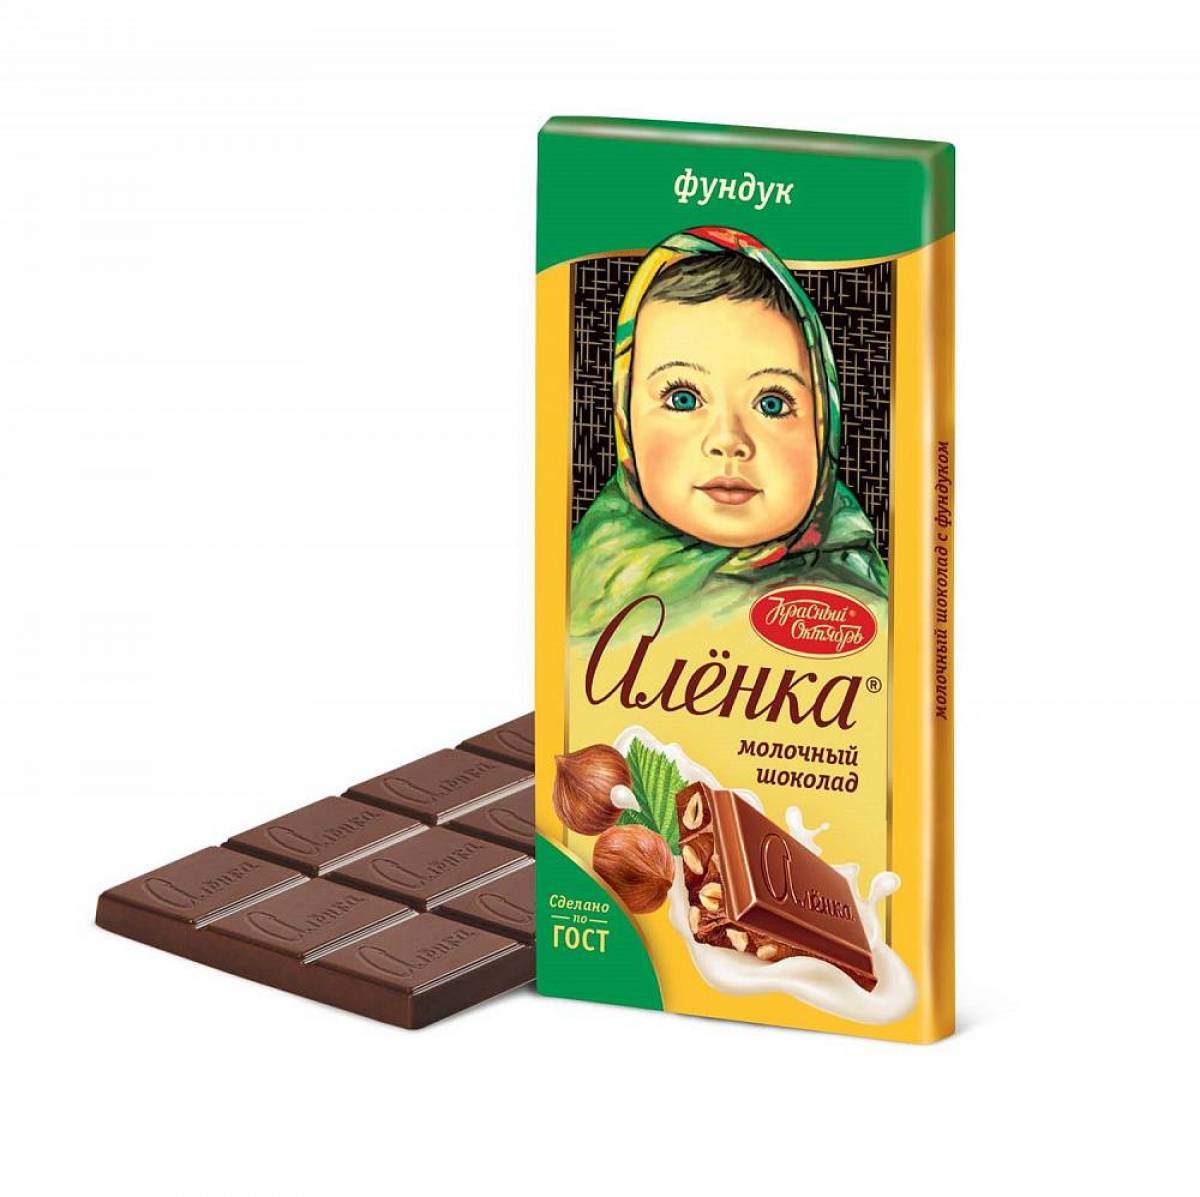 Шоколадка аленка #34